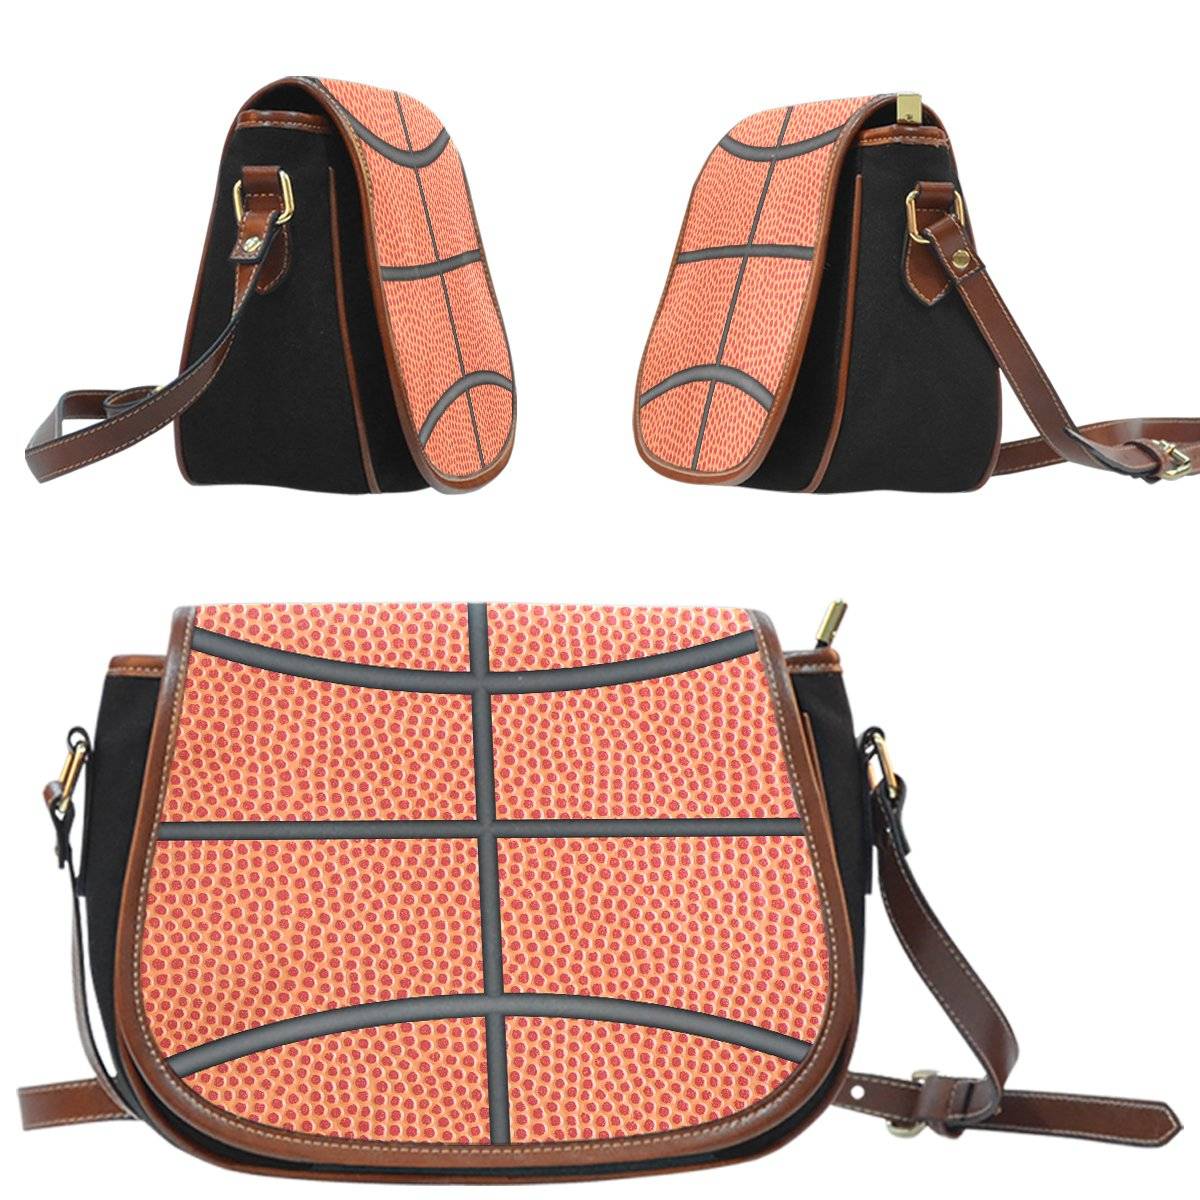 basketball crossover saddle bag purse side view